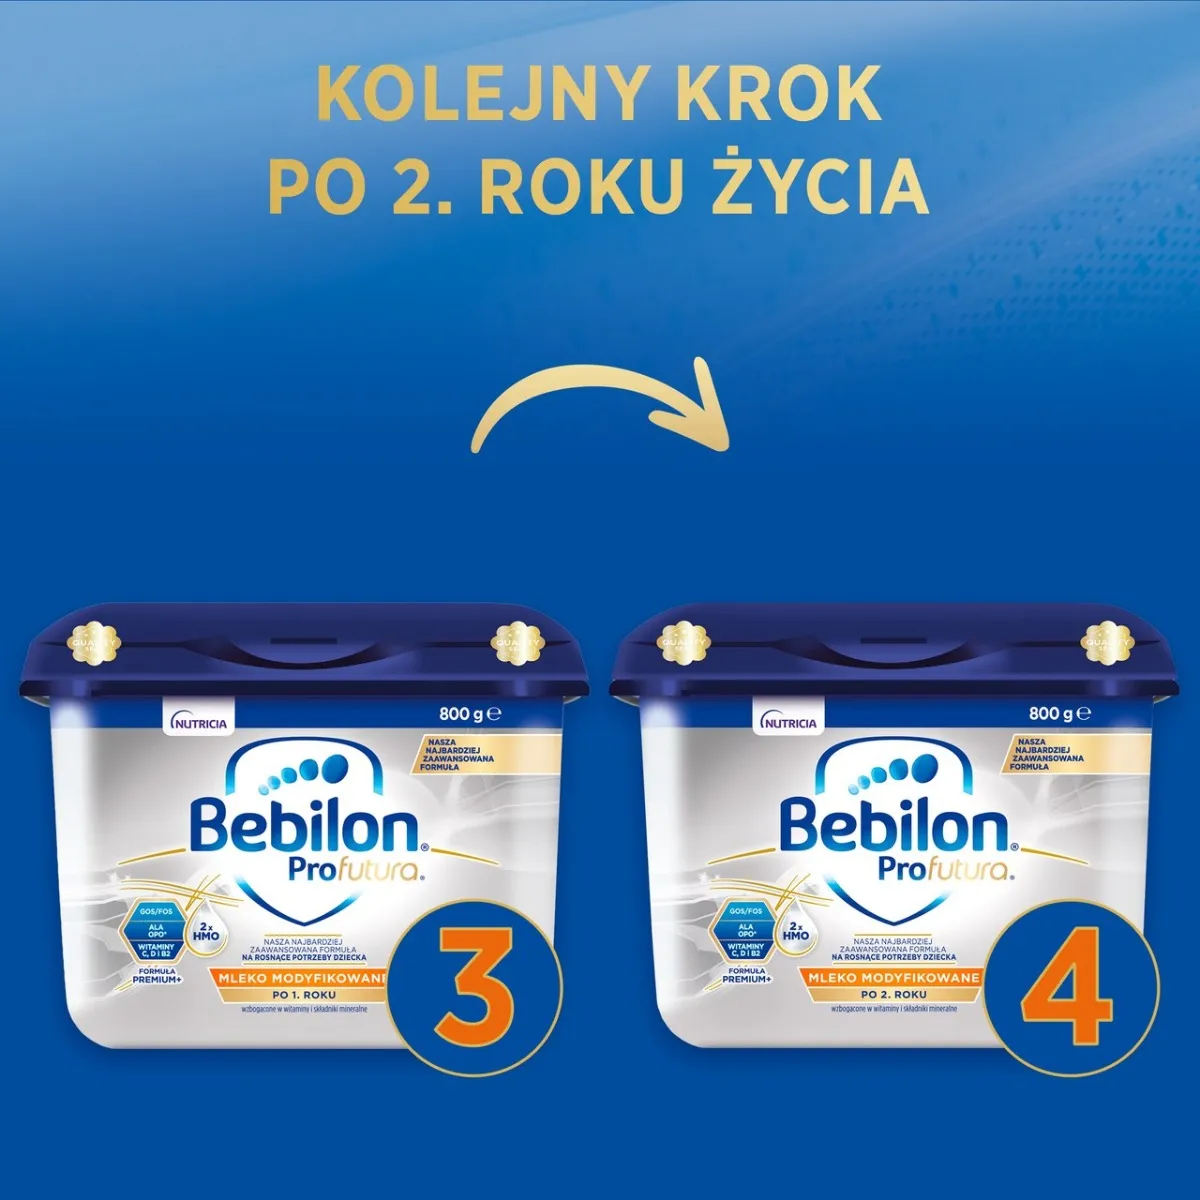 Bebilon Profutura 3, mleko w proszku modyfikowane po 1. roku, 800 g 